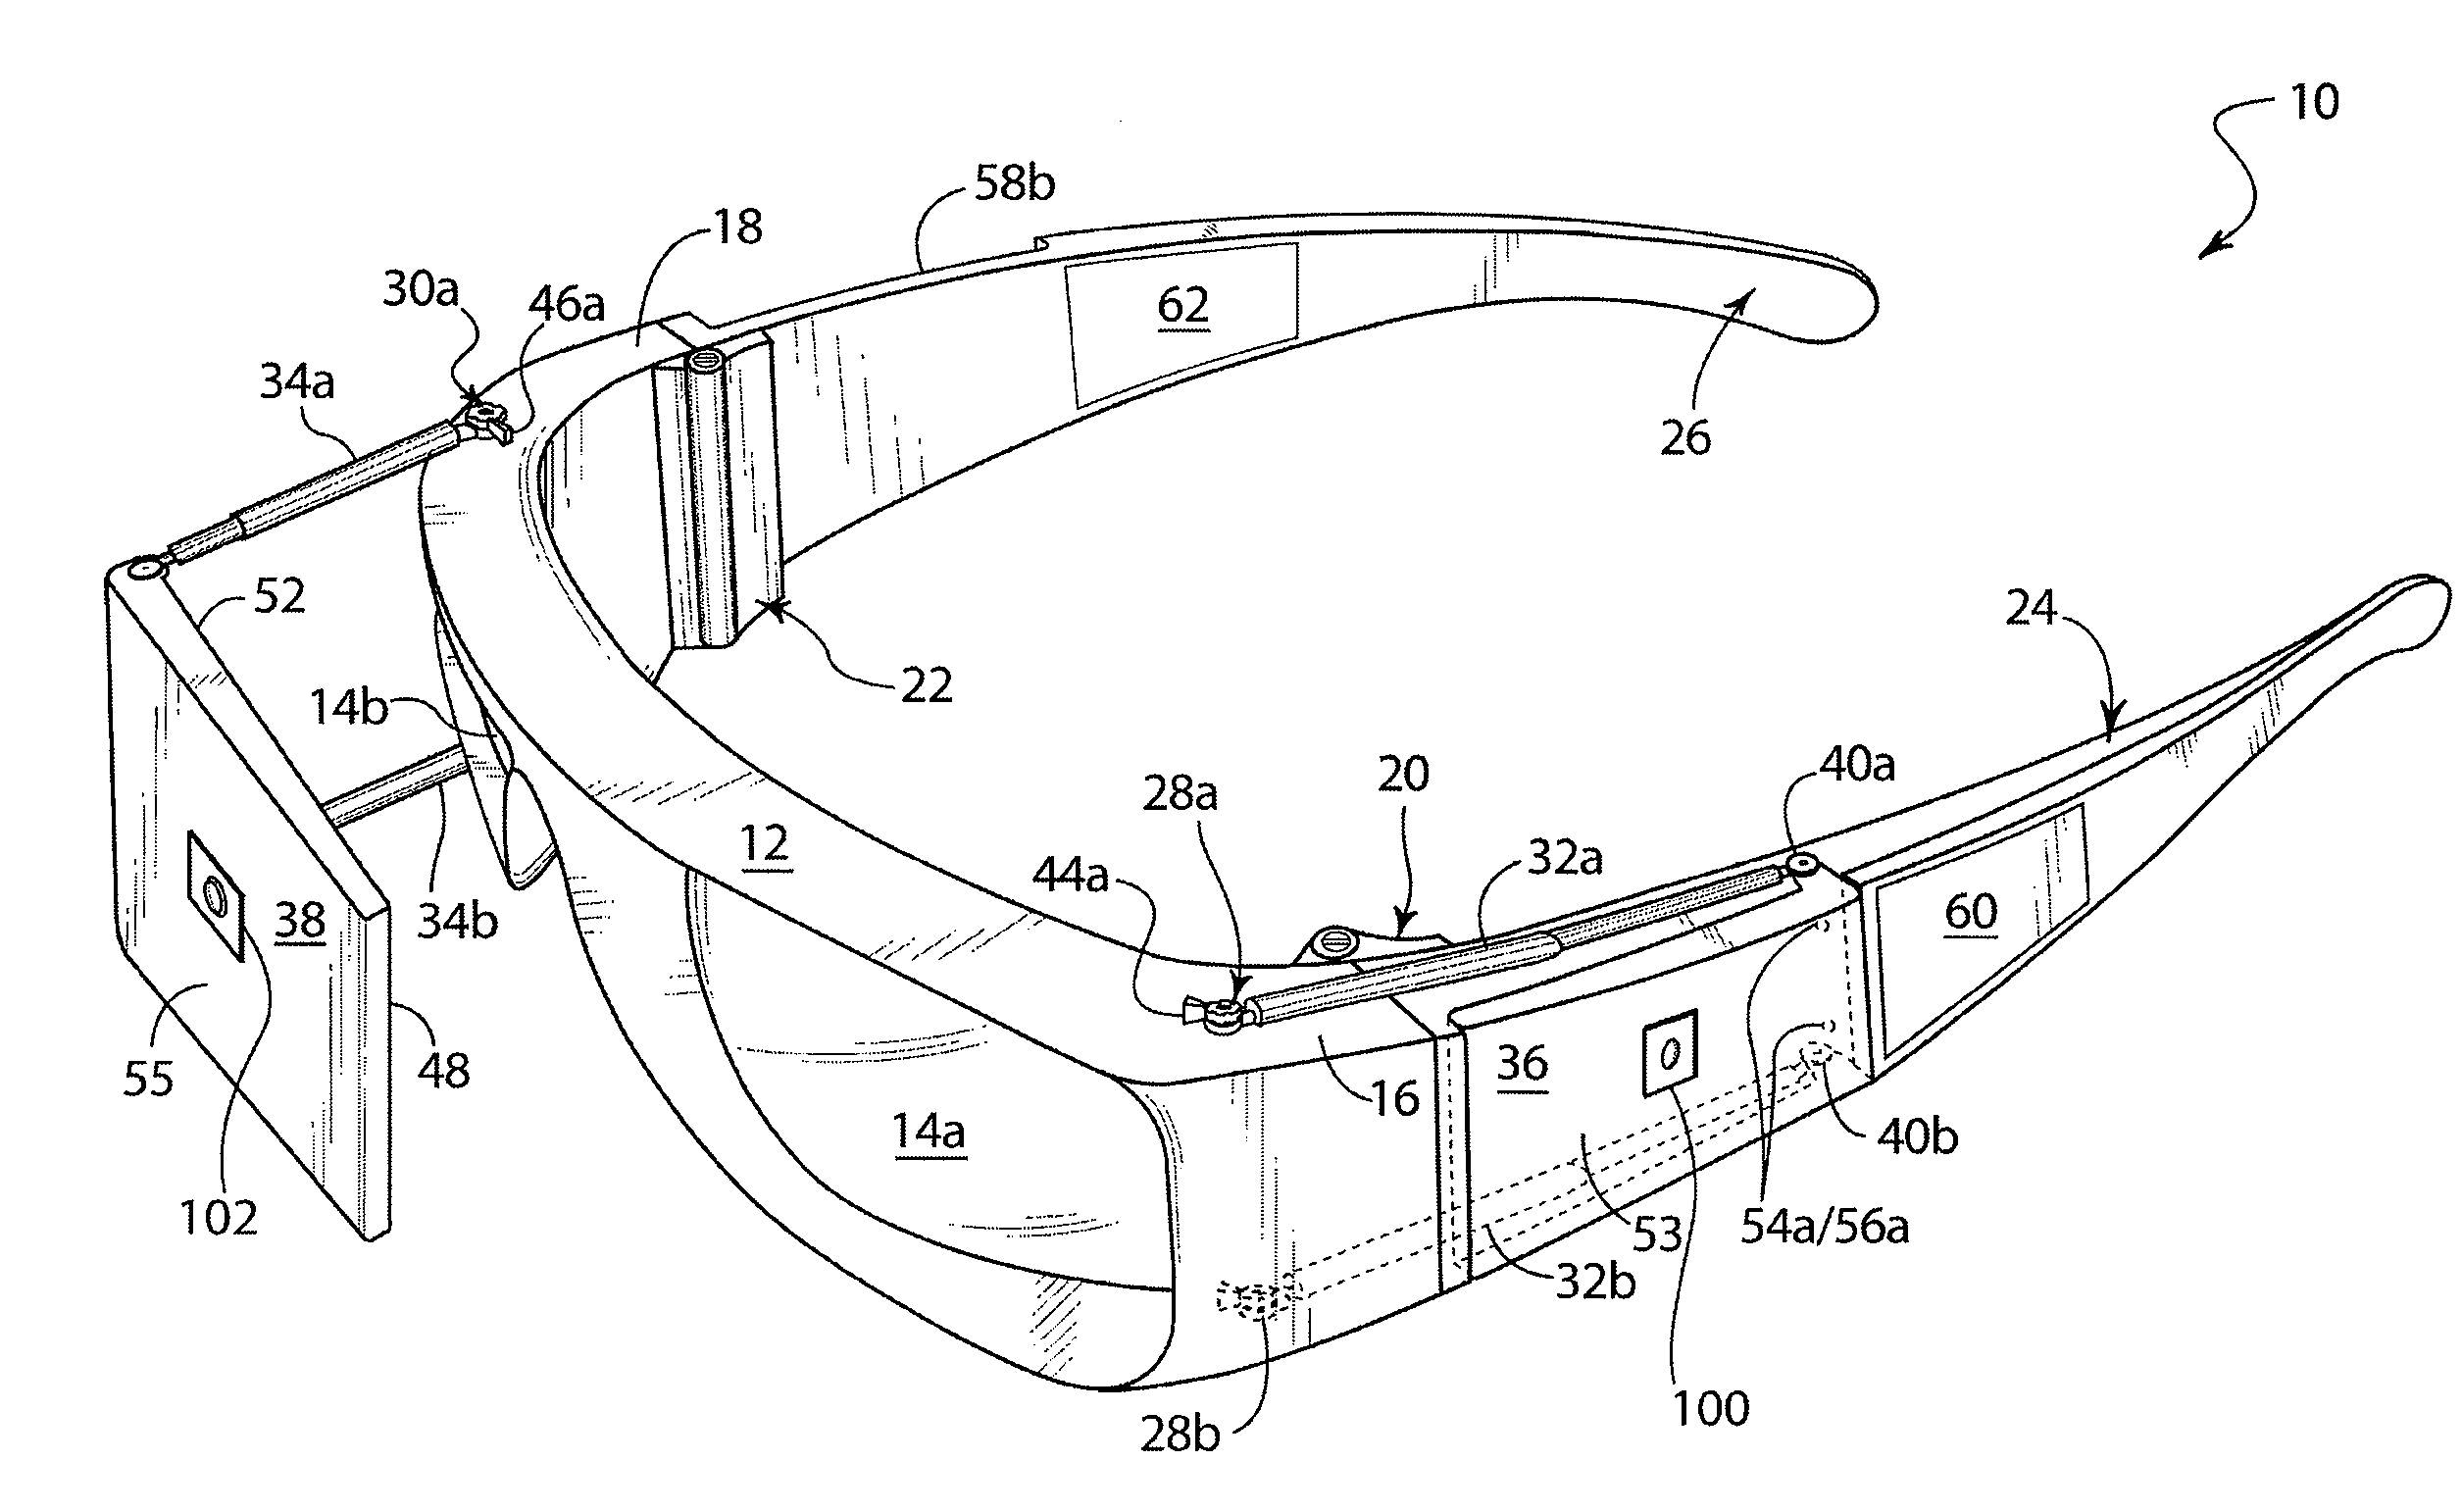 Eyeglasses having integrated telescoping video camera and video display